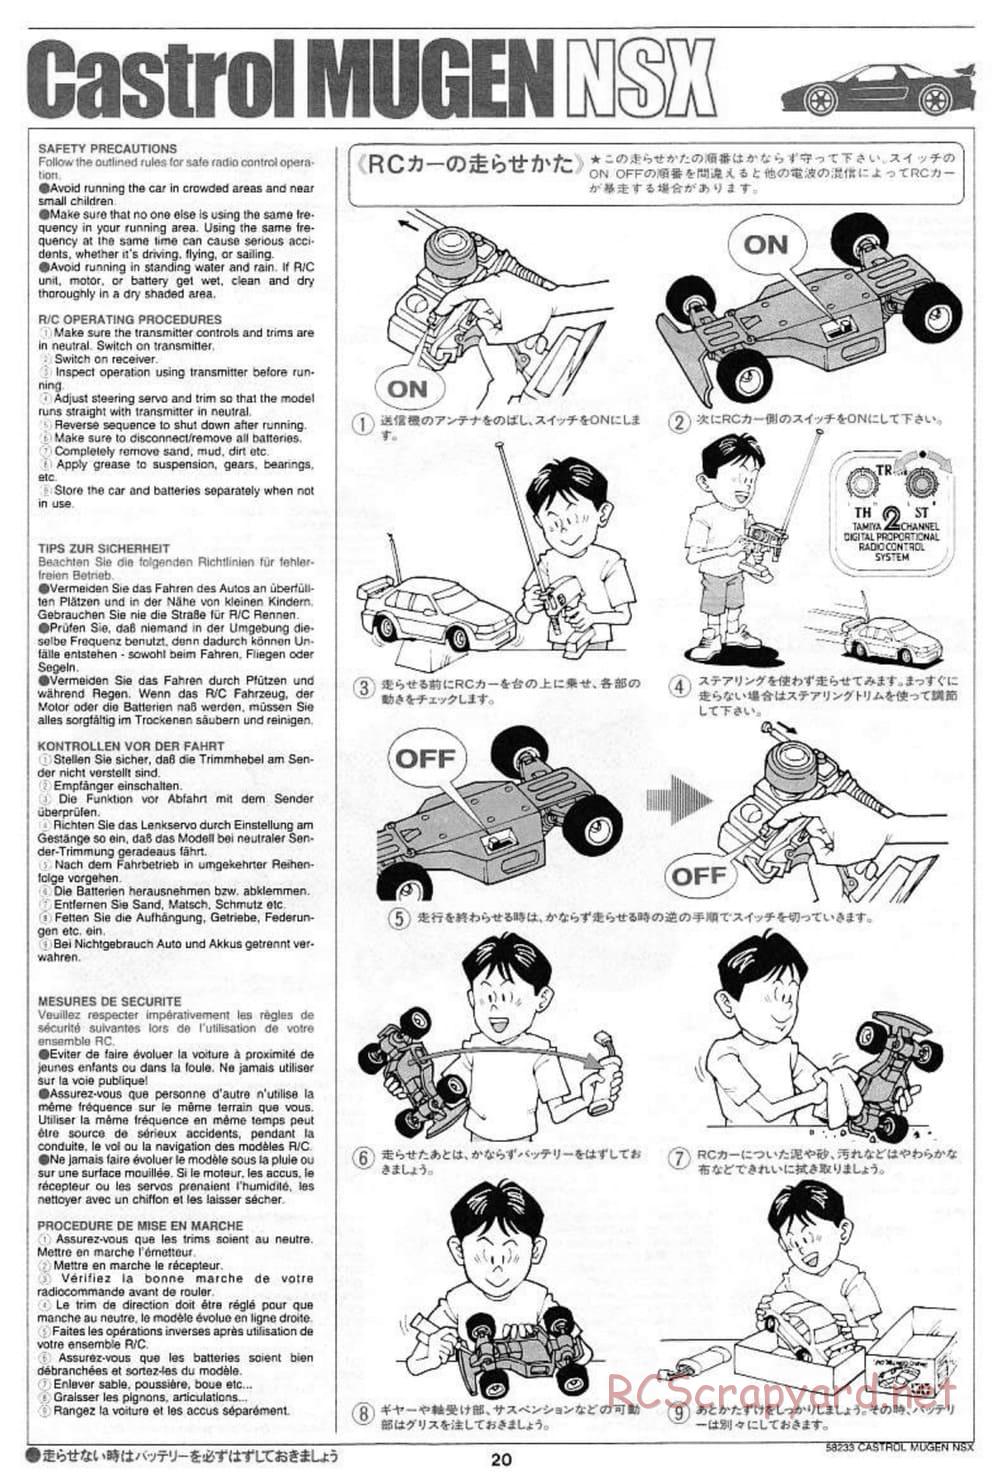 Tamiya - Castrol Mugen NSX - TL-01 Chassis - Manual - Page 20